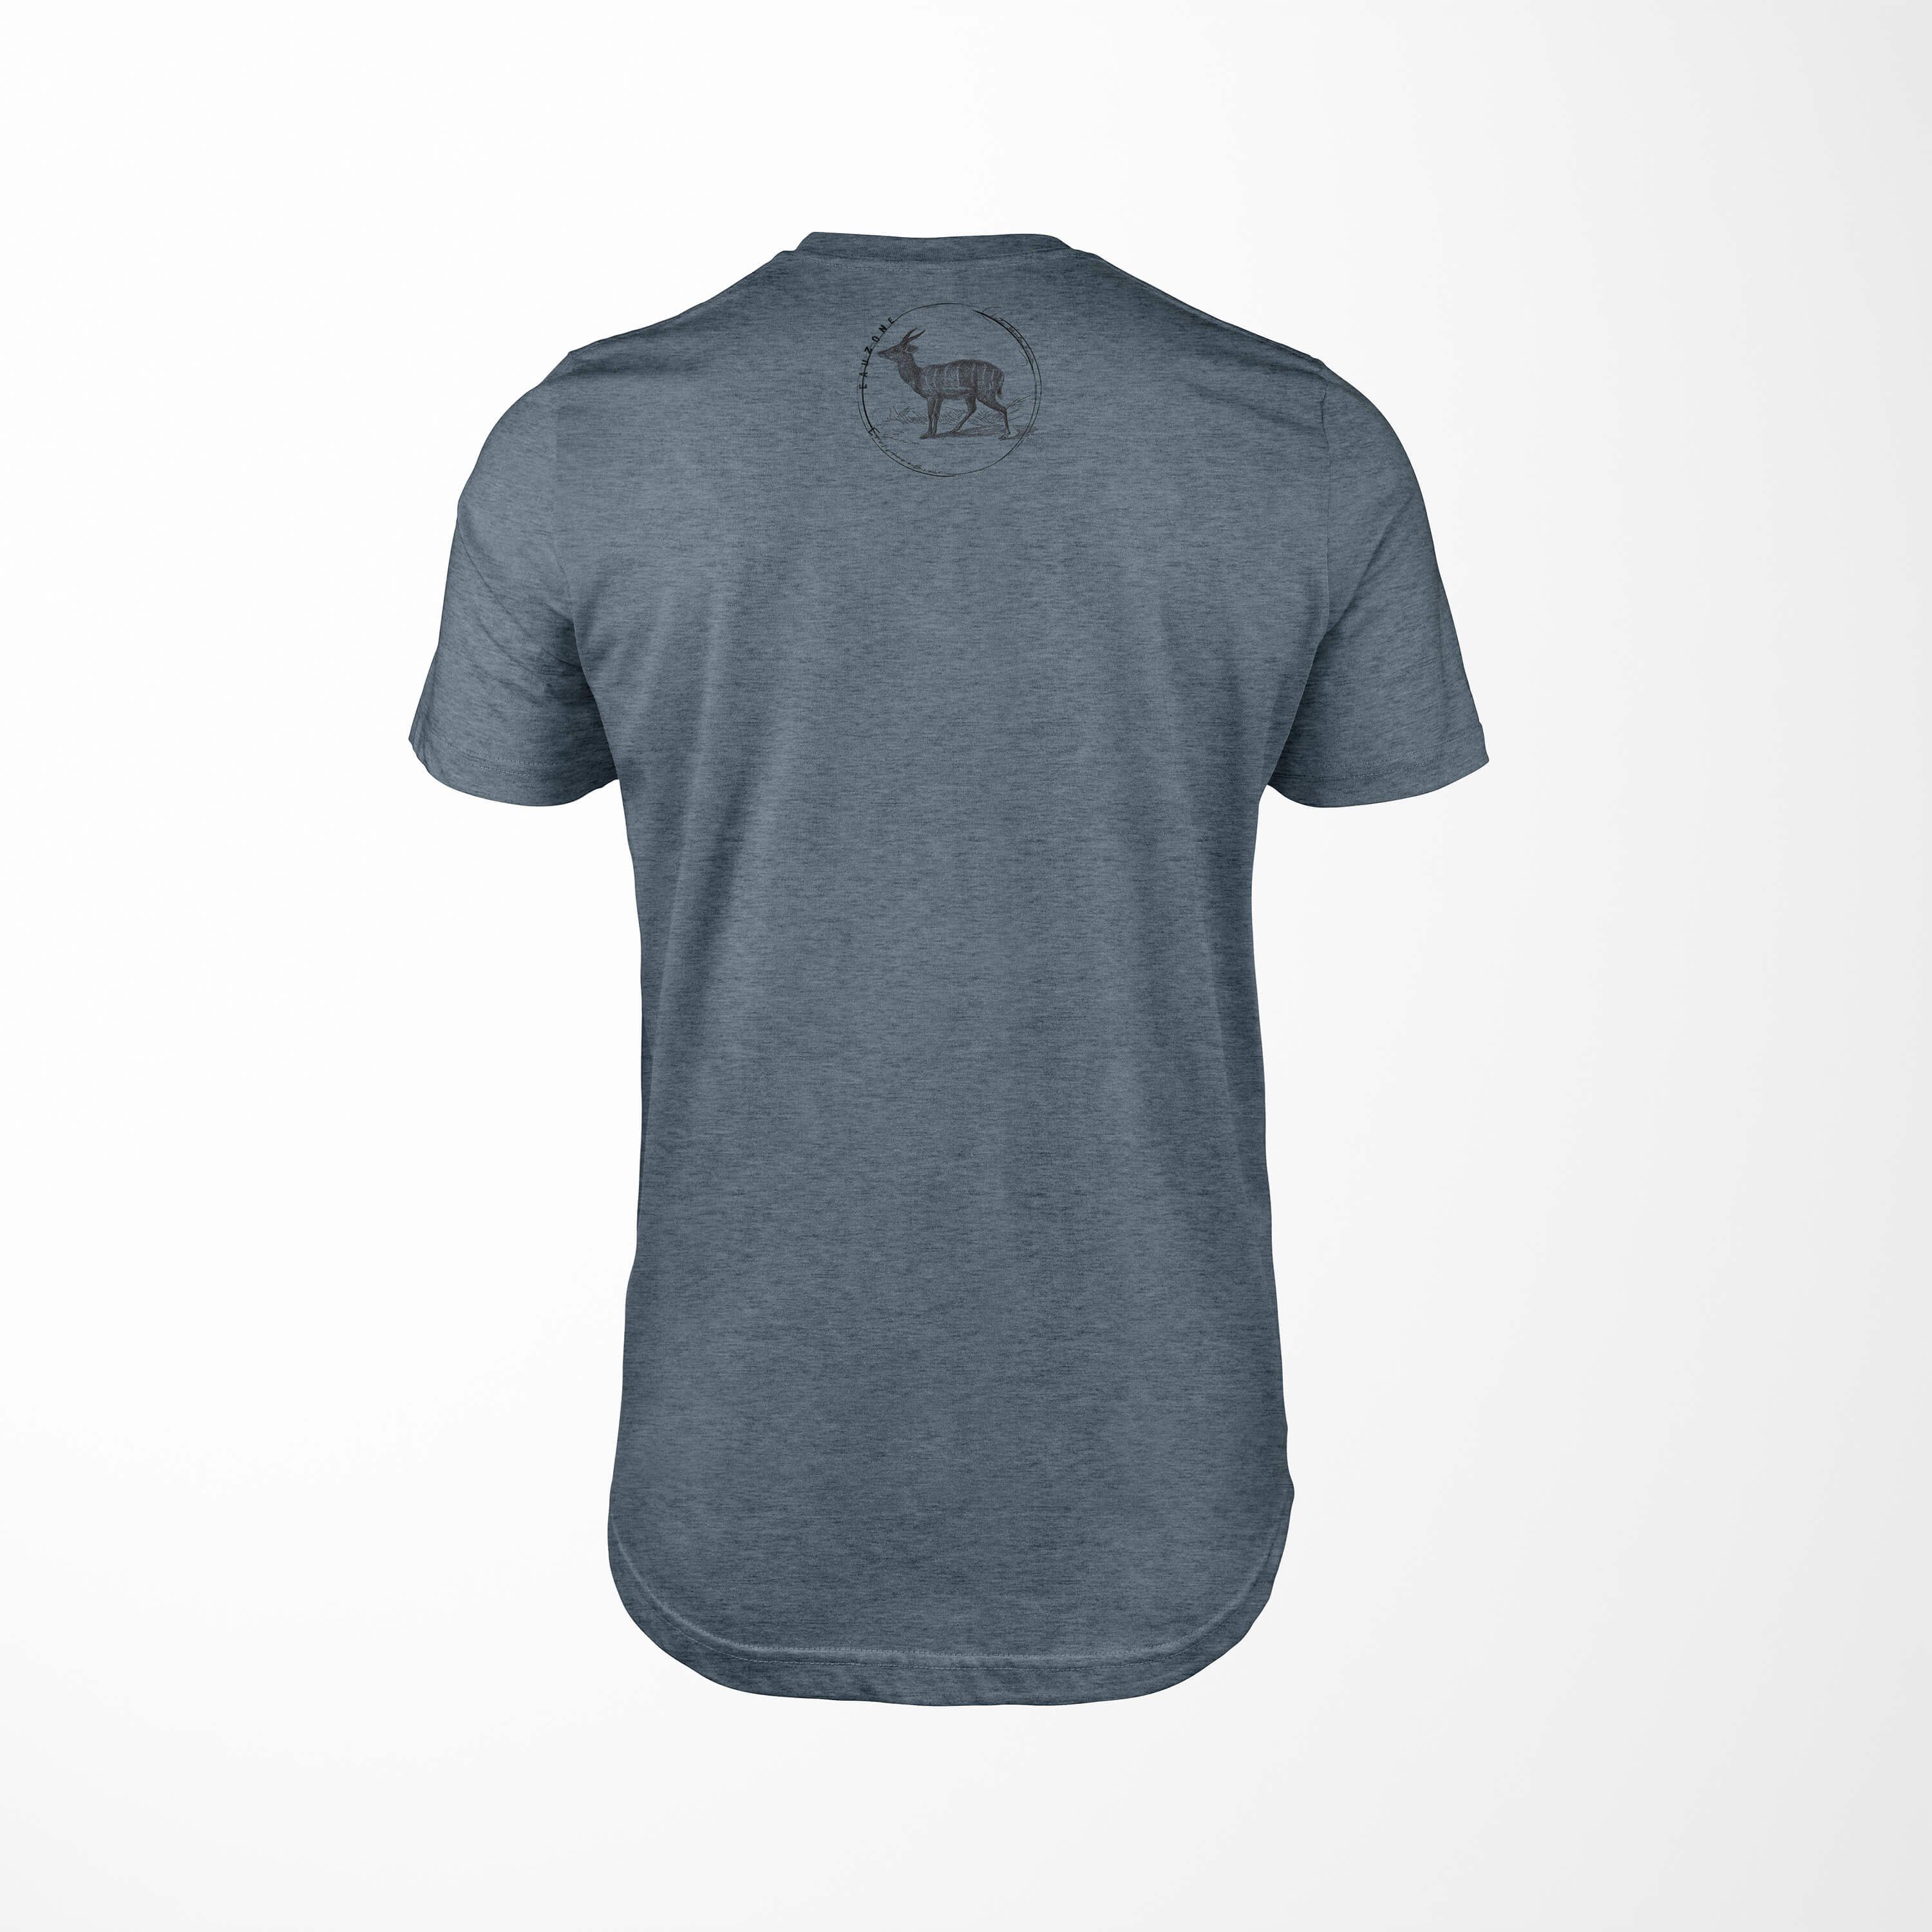 Herren Sinus Antilope T-Shirt Evolution Art Indigo T-Shirt